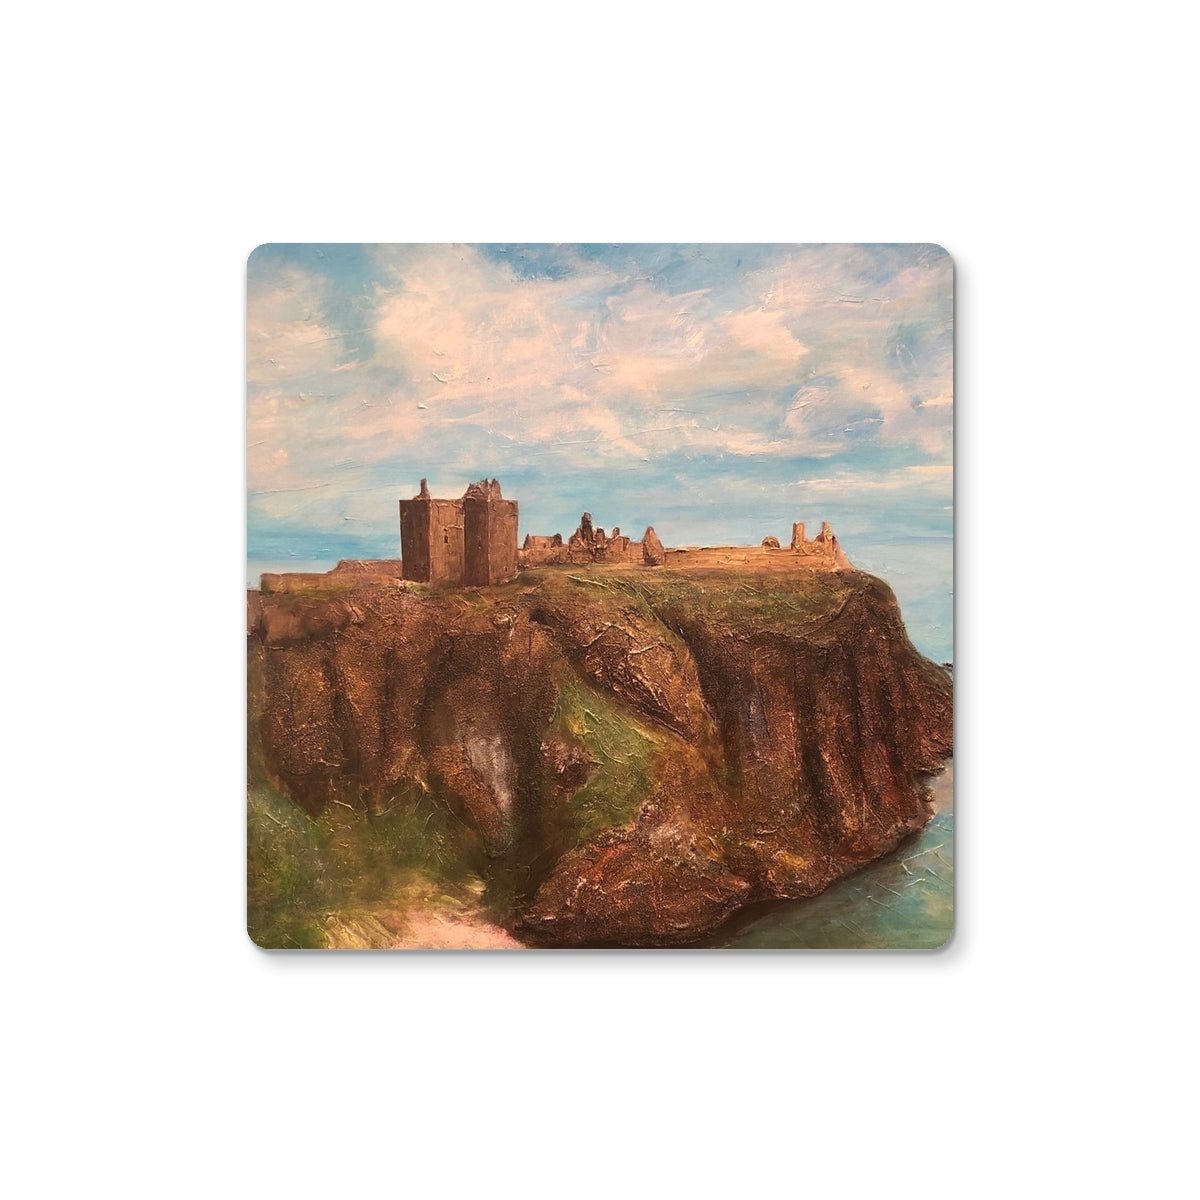 Dunnottar Castle Art Gifts Coaster-Homeware-Prodigi-6 Coasters-Paintings, Prints, Homeware, Art Gifts From Scotland By Scottish Artist Kevin Hunter